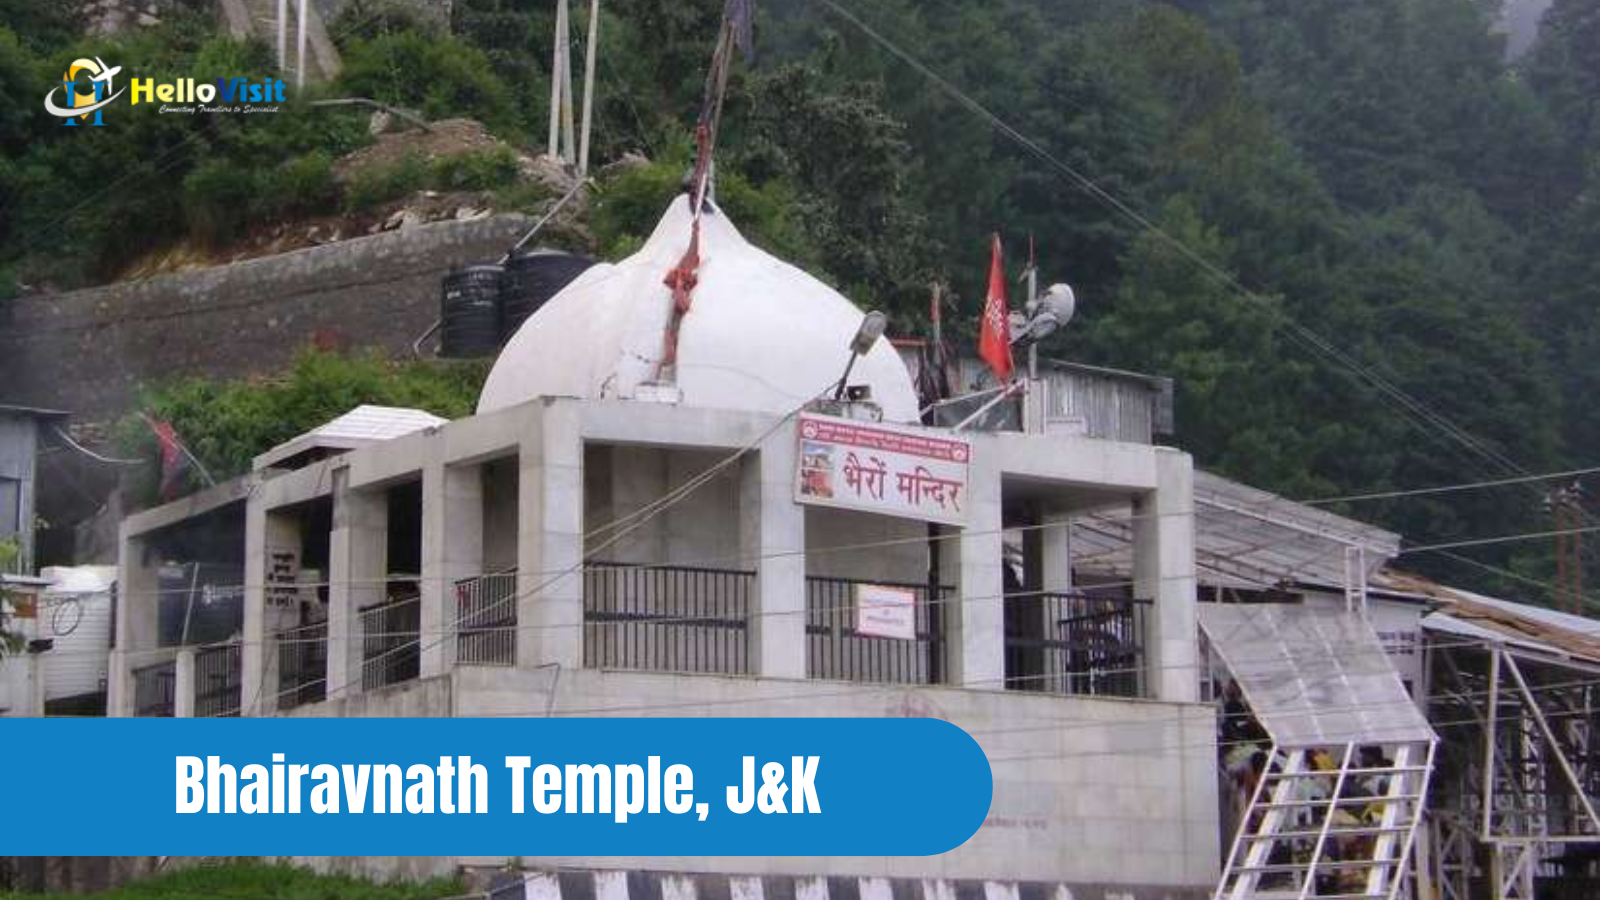 Bhairavnath Temple, J&K